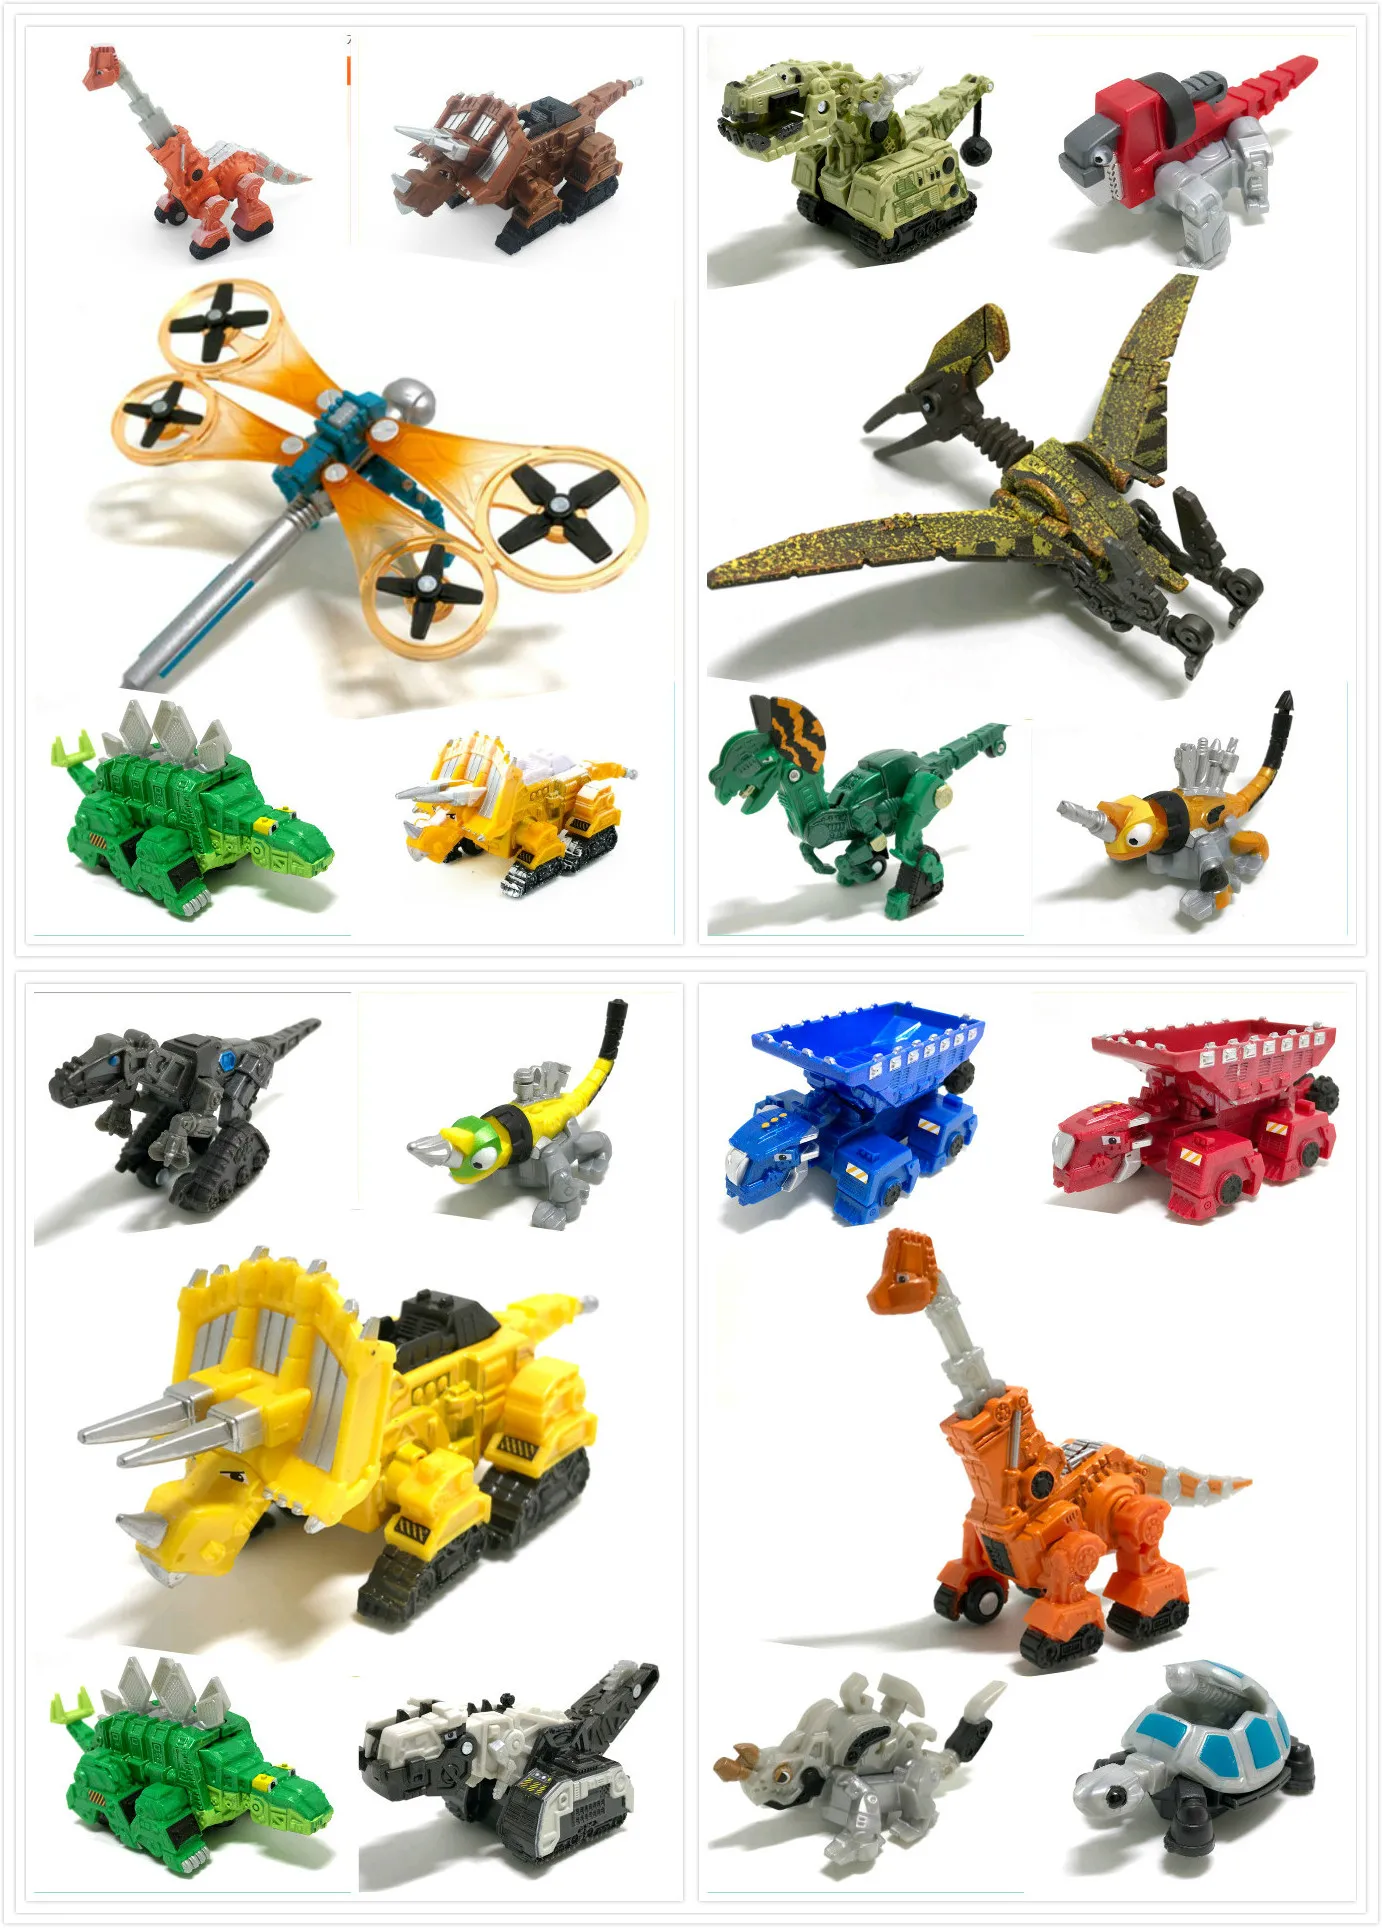 Scene toys Dinotrux truck toy car new Collection models of dinosaur toys dinosaur models children present Mini toys of children